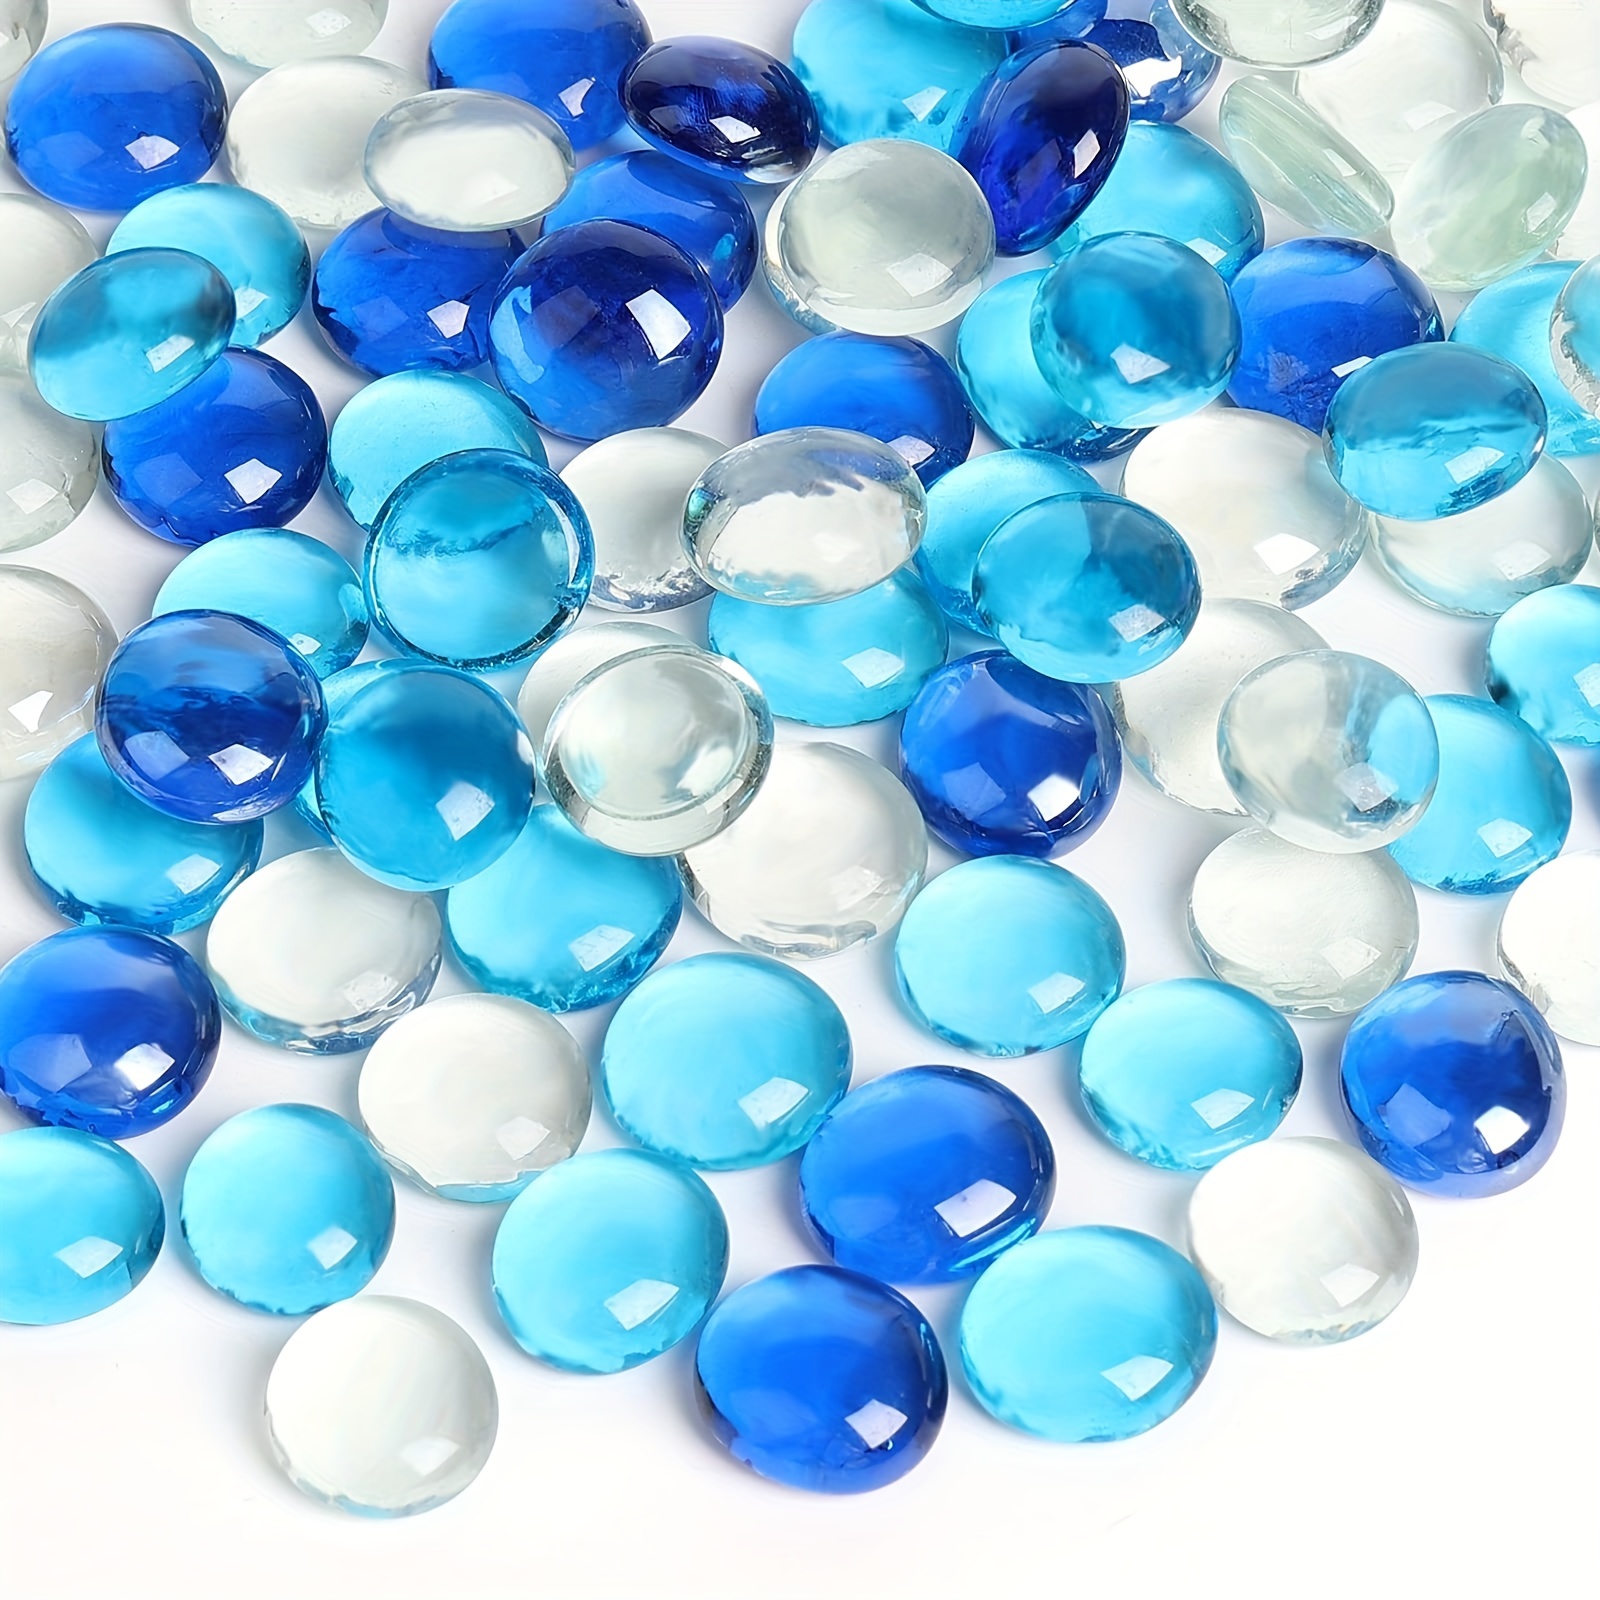 Blue Mix Glass Gemstone Beads Vase Fillers (2.2 LBS) Flat Marble Beads  Multiple Color Choices Aquarium Decor Rocks Floral Stones Decorative Mosaic  Gem